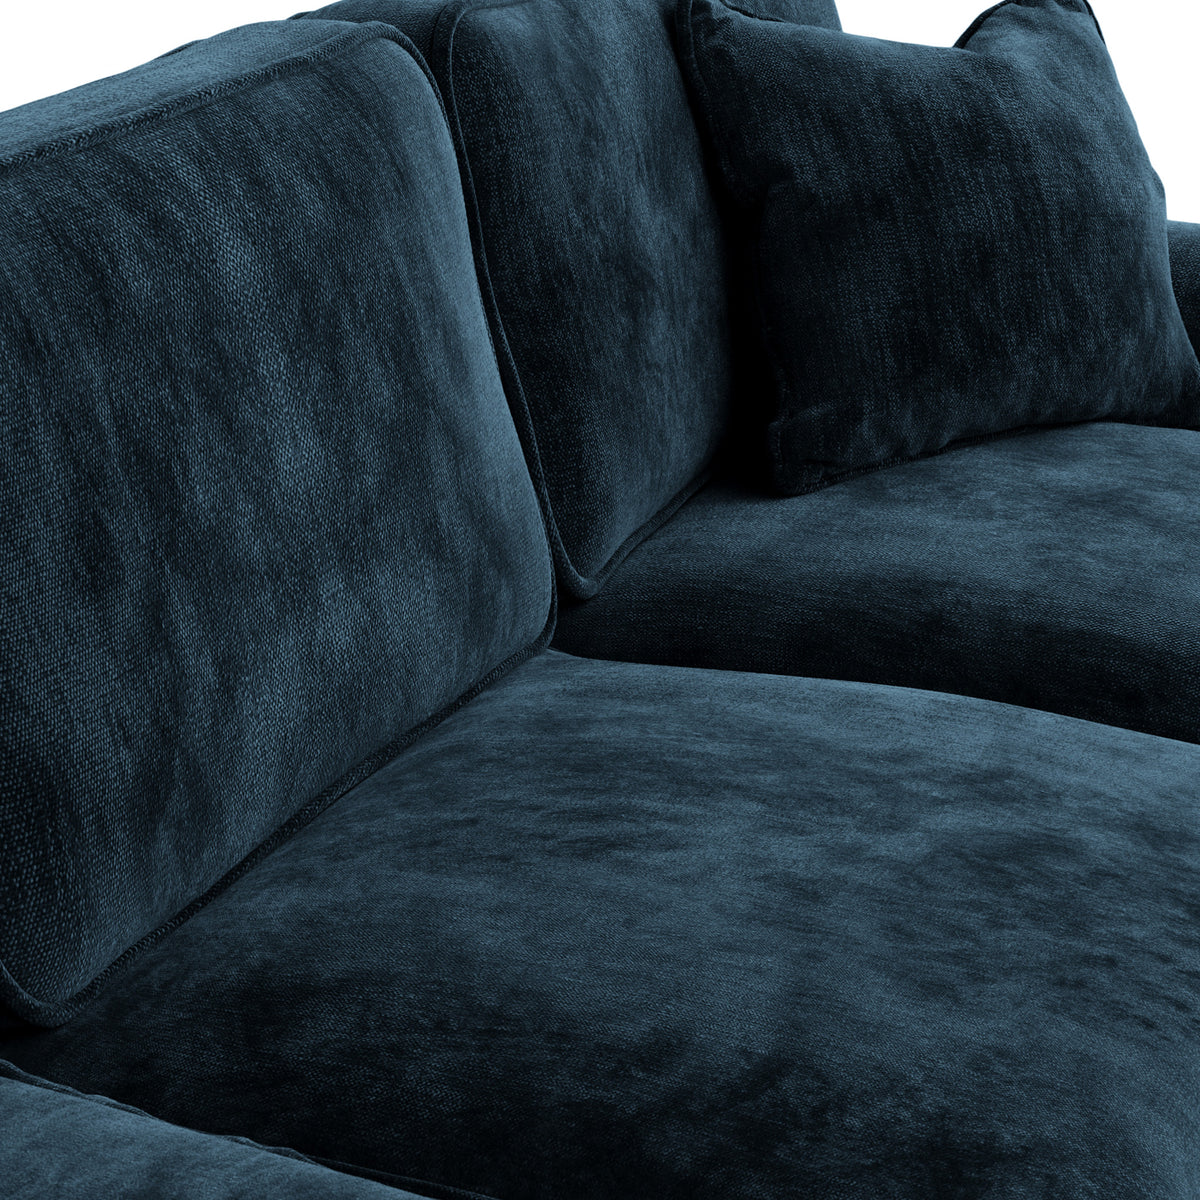 Alfie Navy Blue Large Corner Sofa from Roseland Furniture